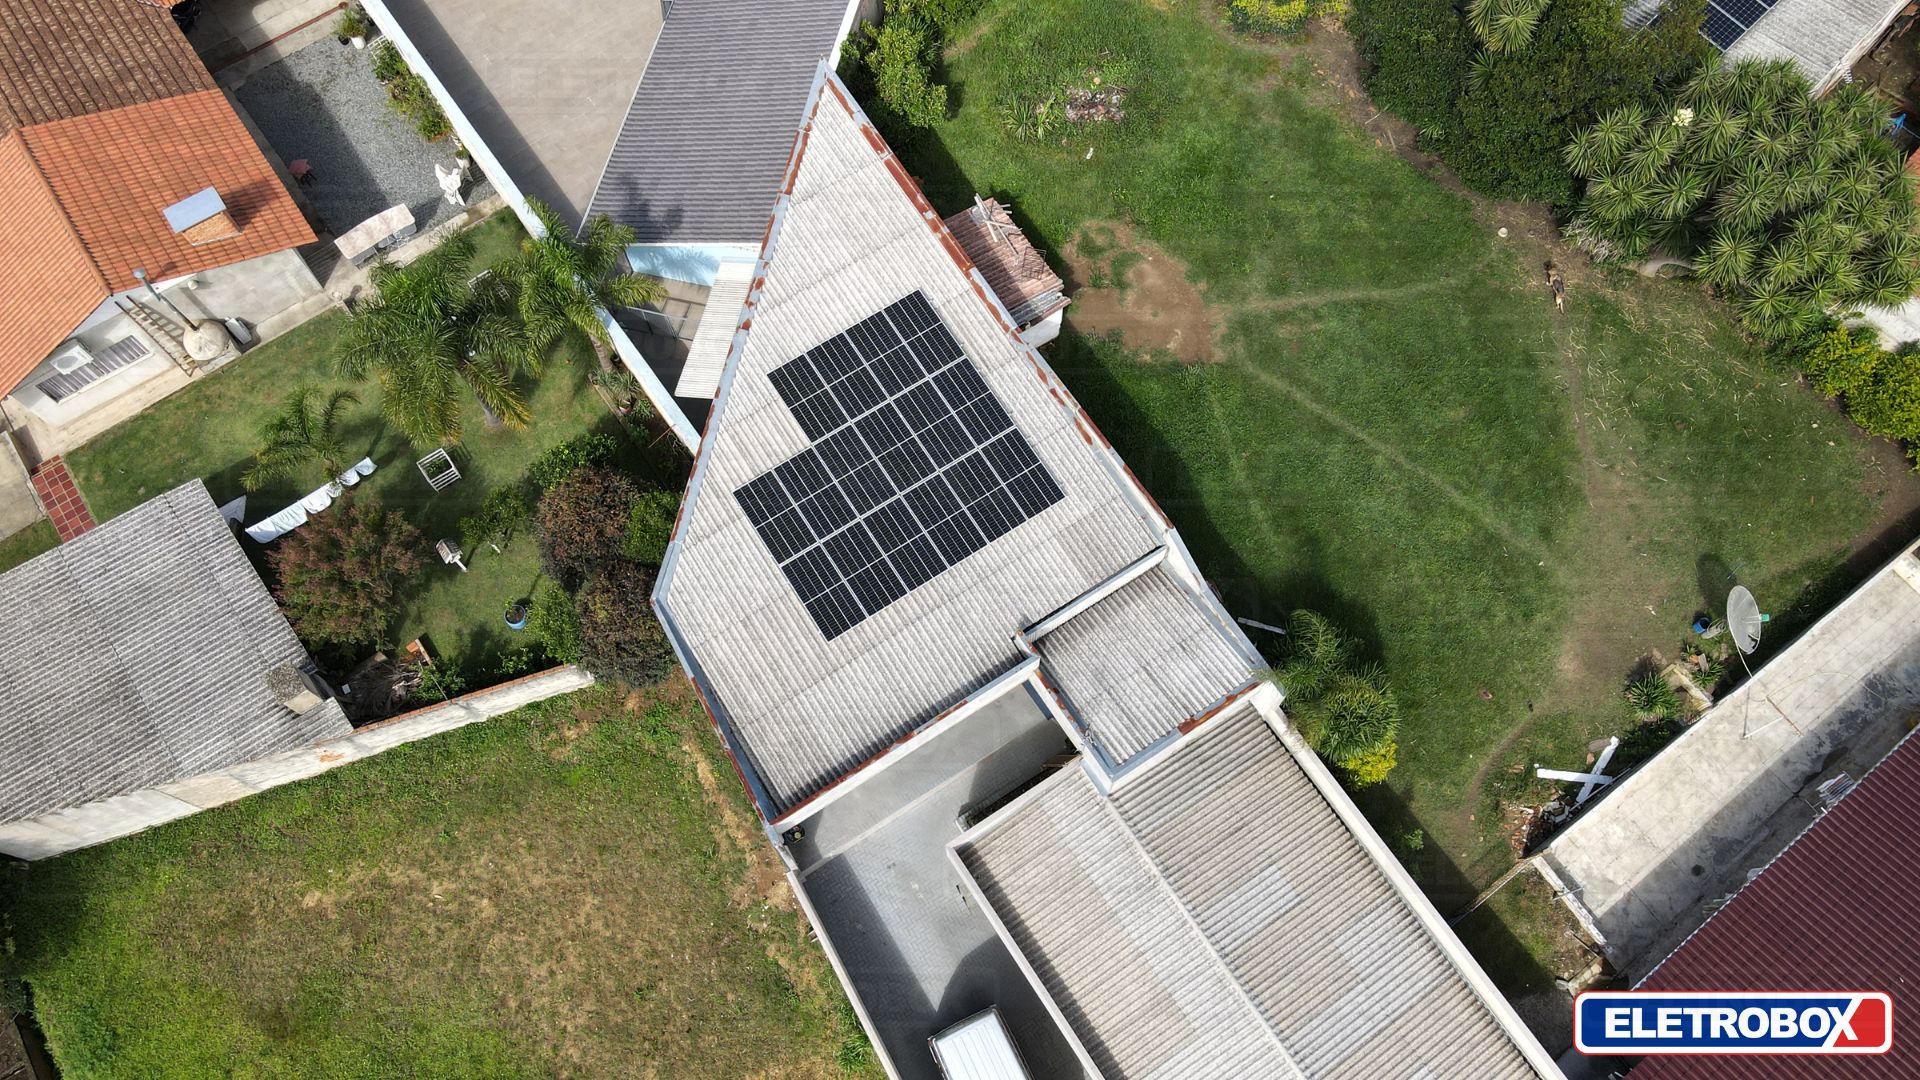 Eletrobox Energia Solar - Marcenaria São José